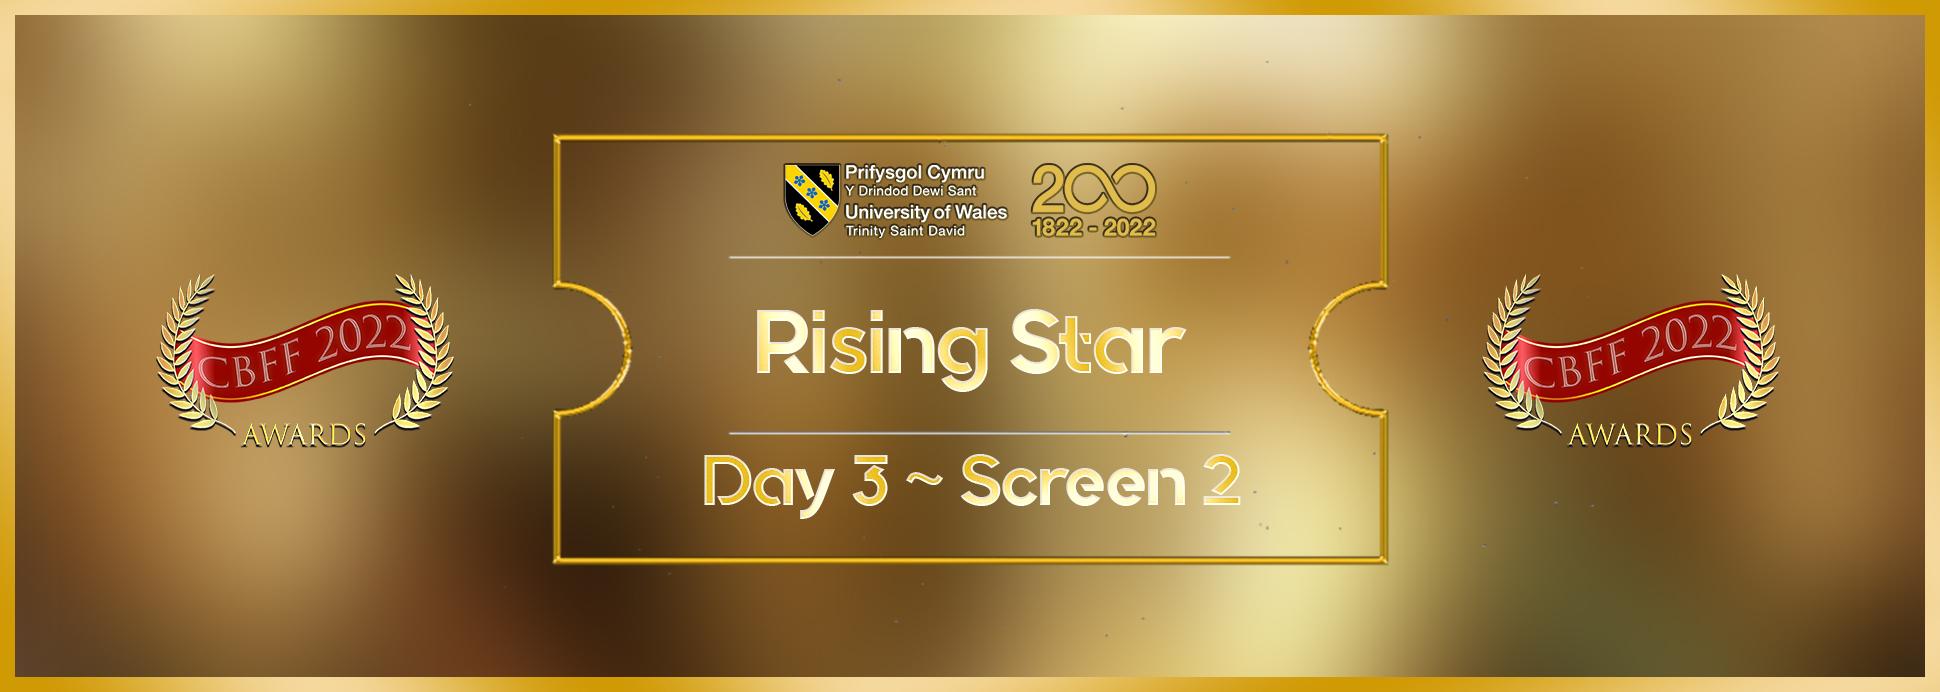 Day 3 Screen 2 Rising Star